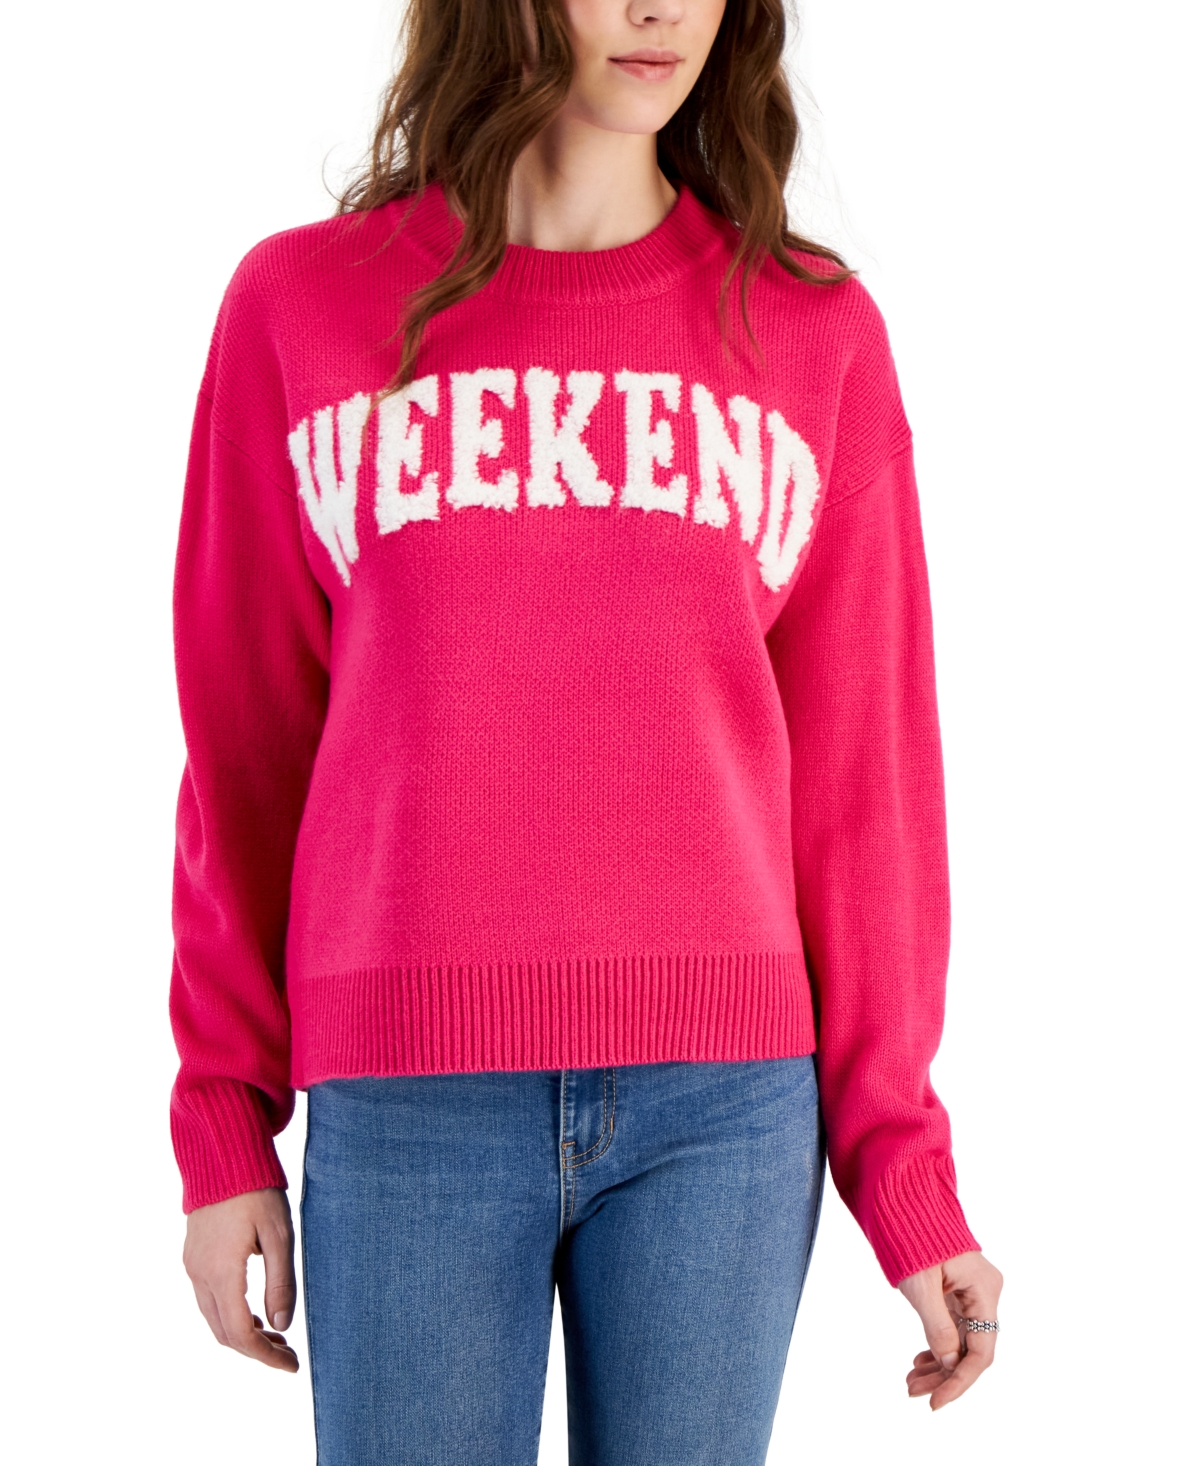 Juniors' Long-Sleeve Sweater - Weekend Combo